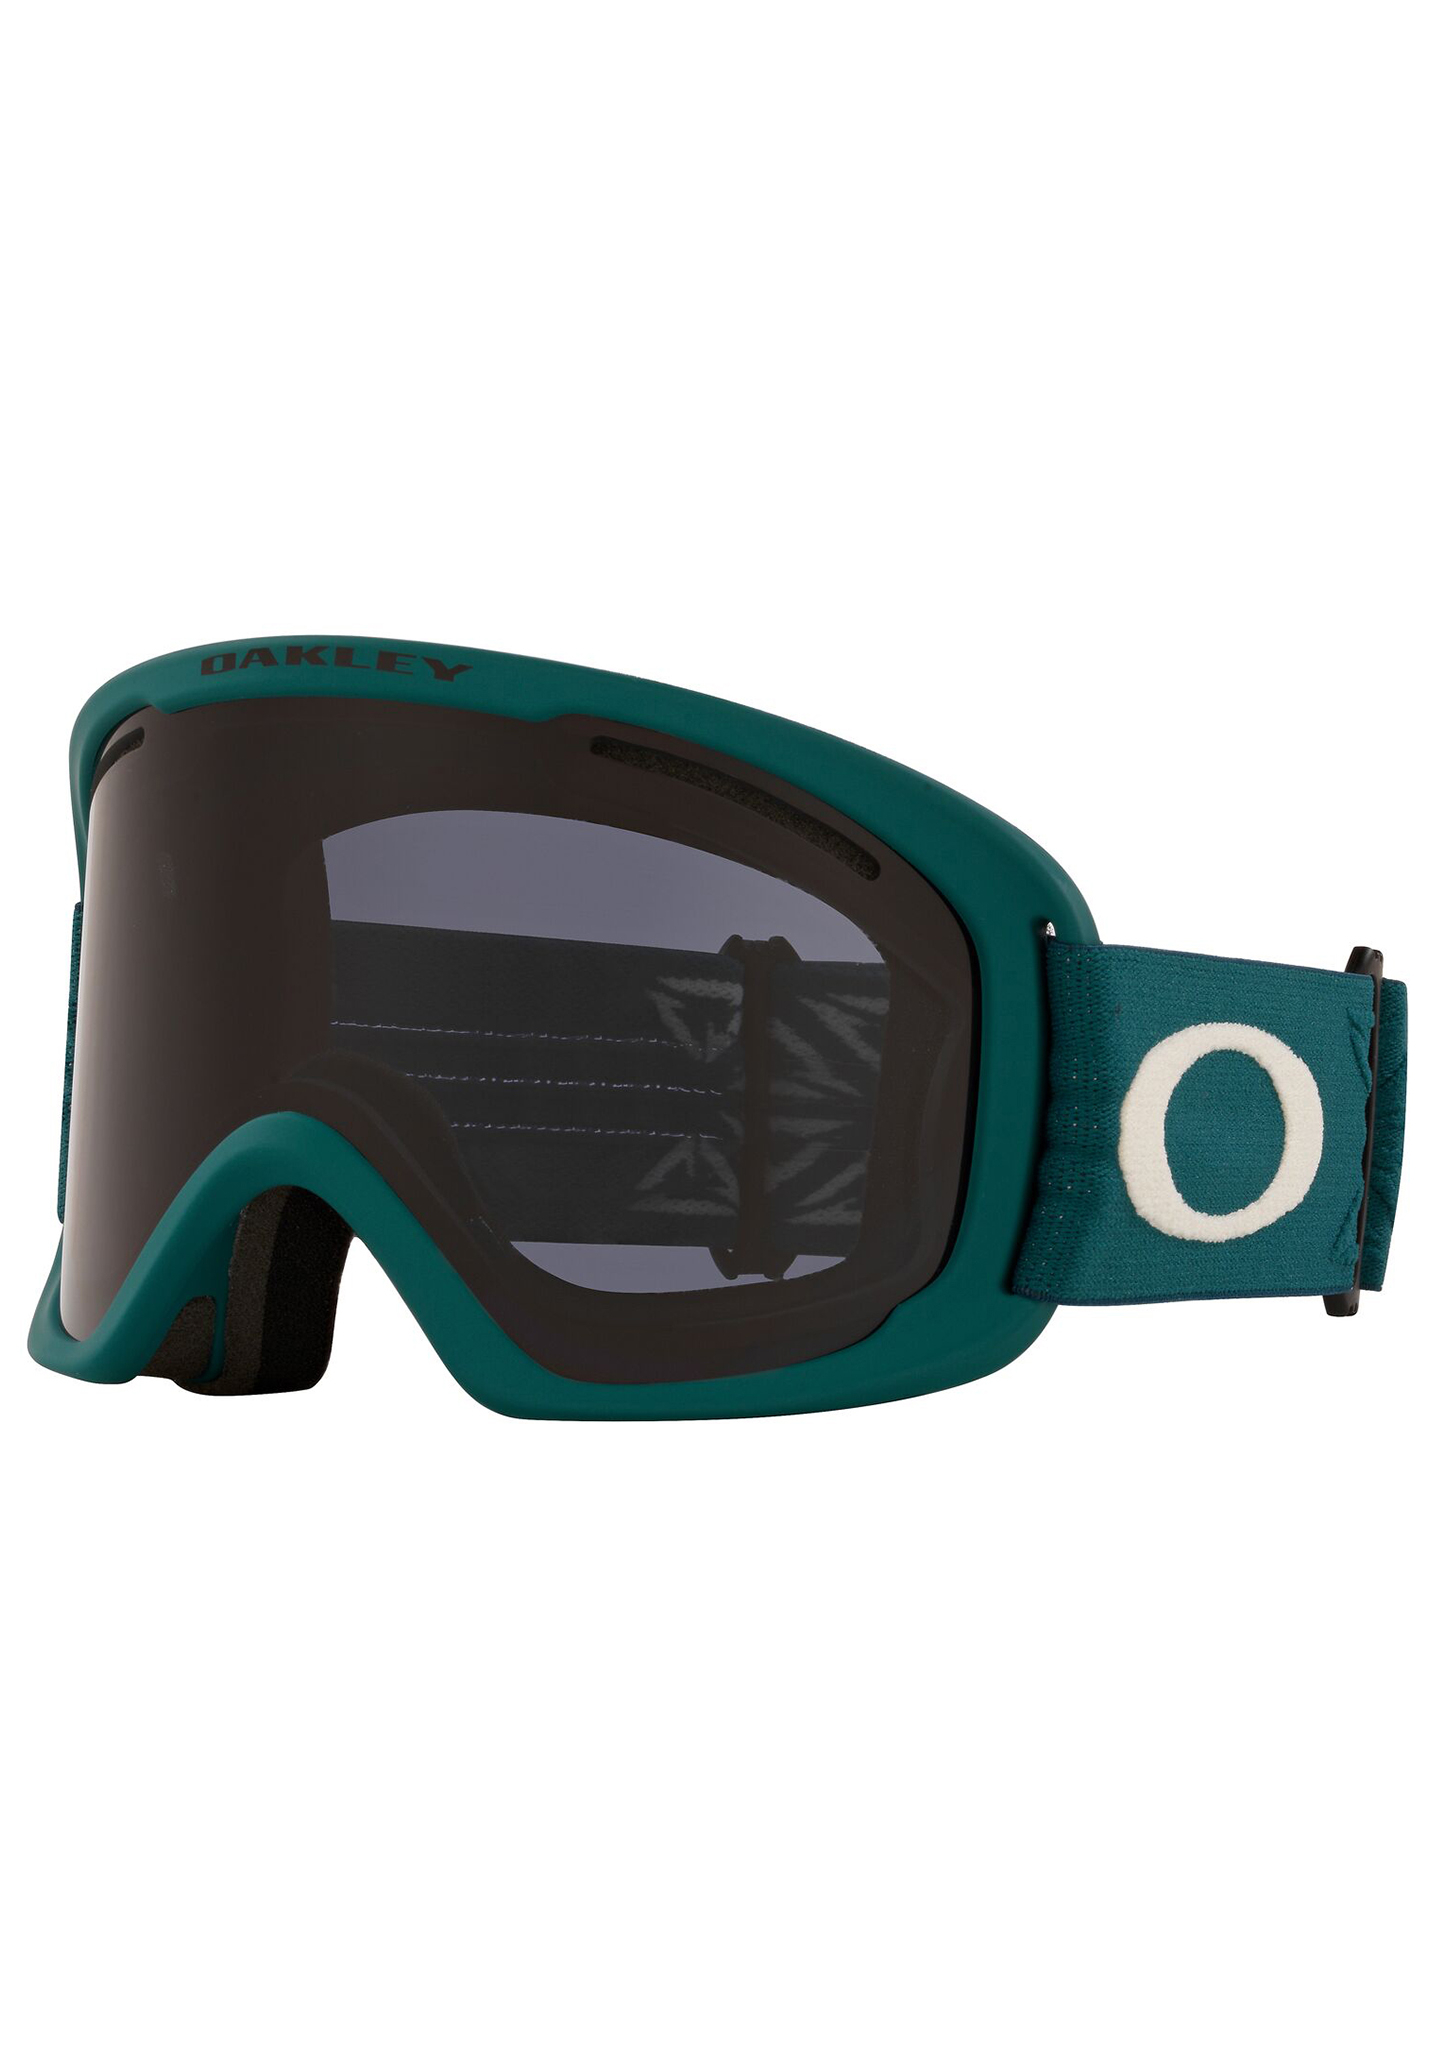 Oakley O Frame 2.0 Pro XL Snowboardbrillen prizm icon balsam/dunkelgrau & persimone One Size